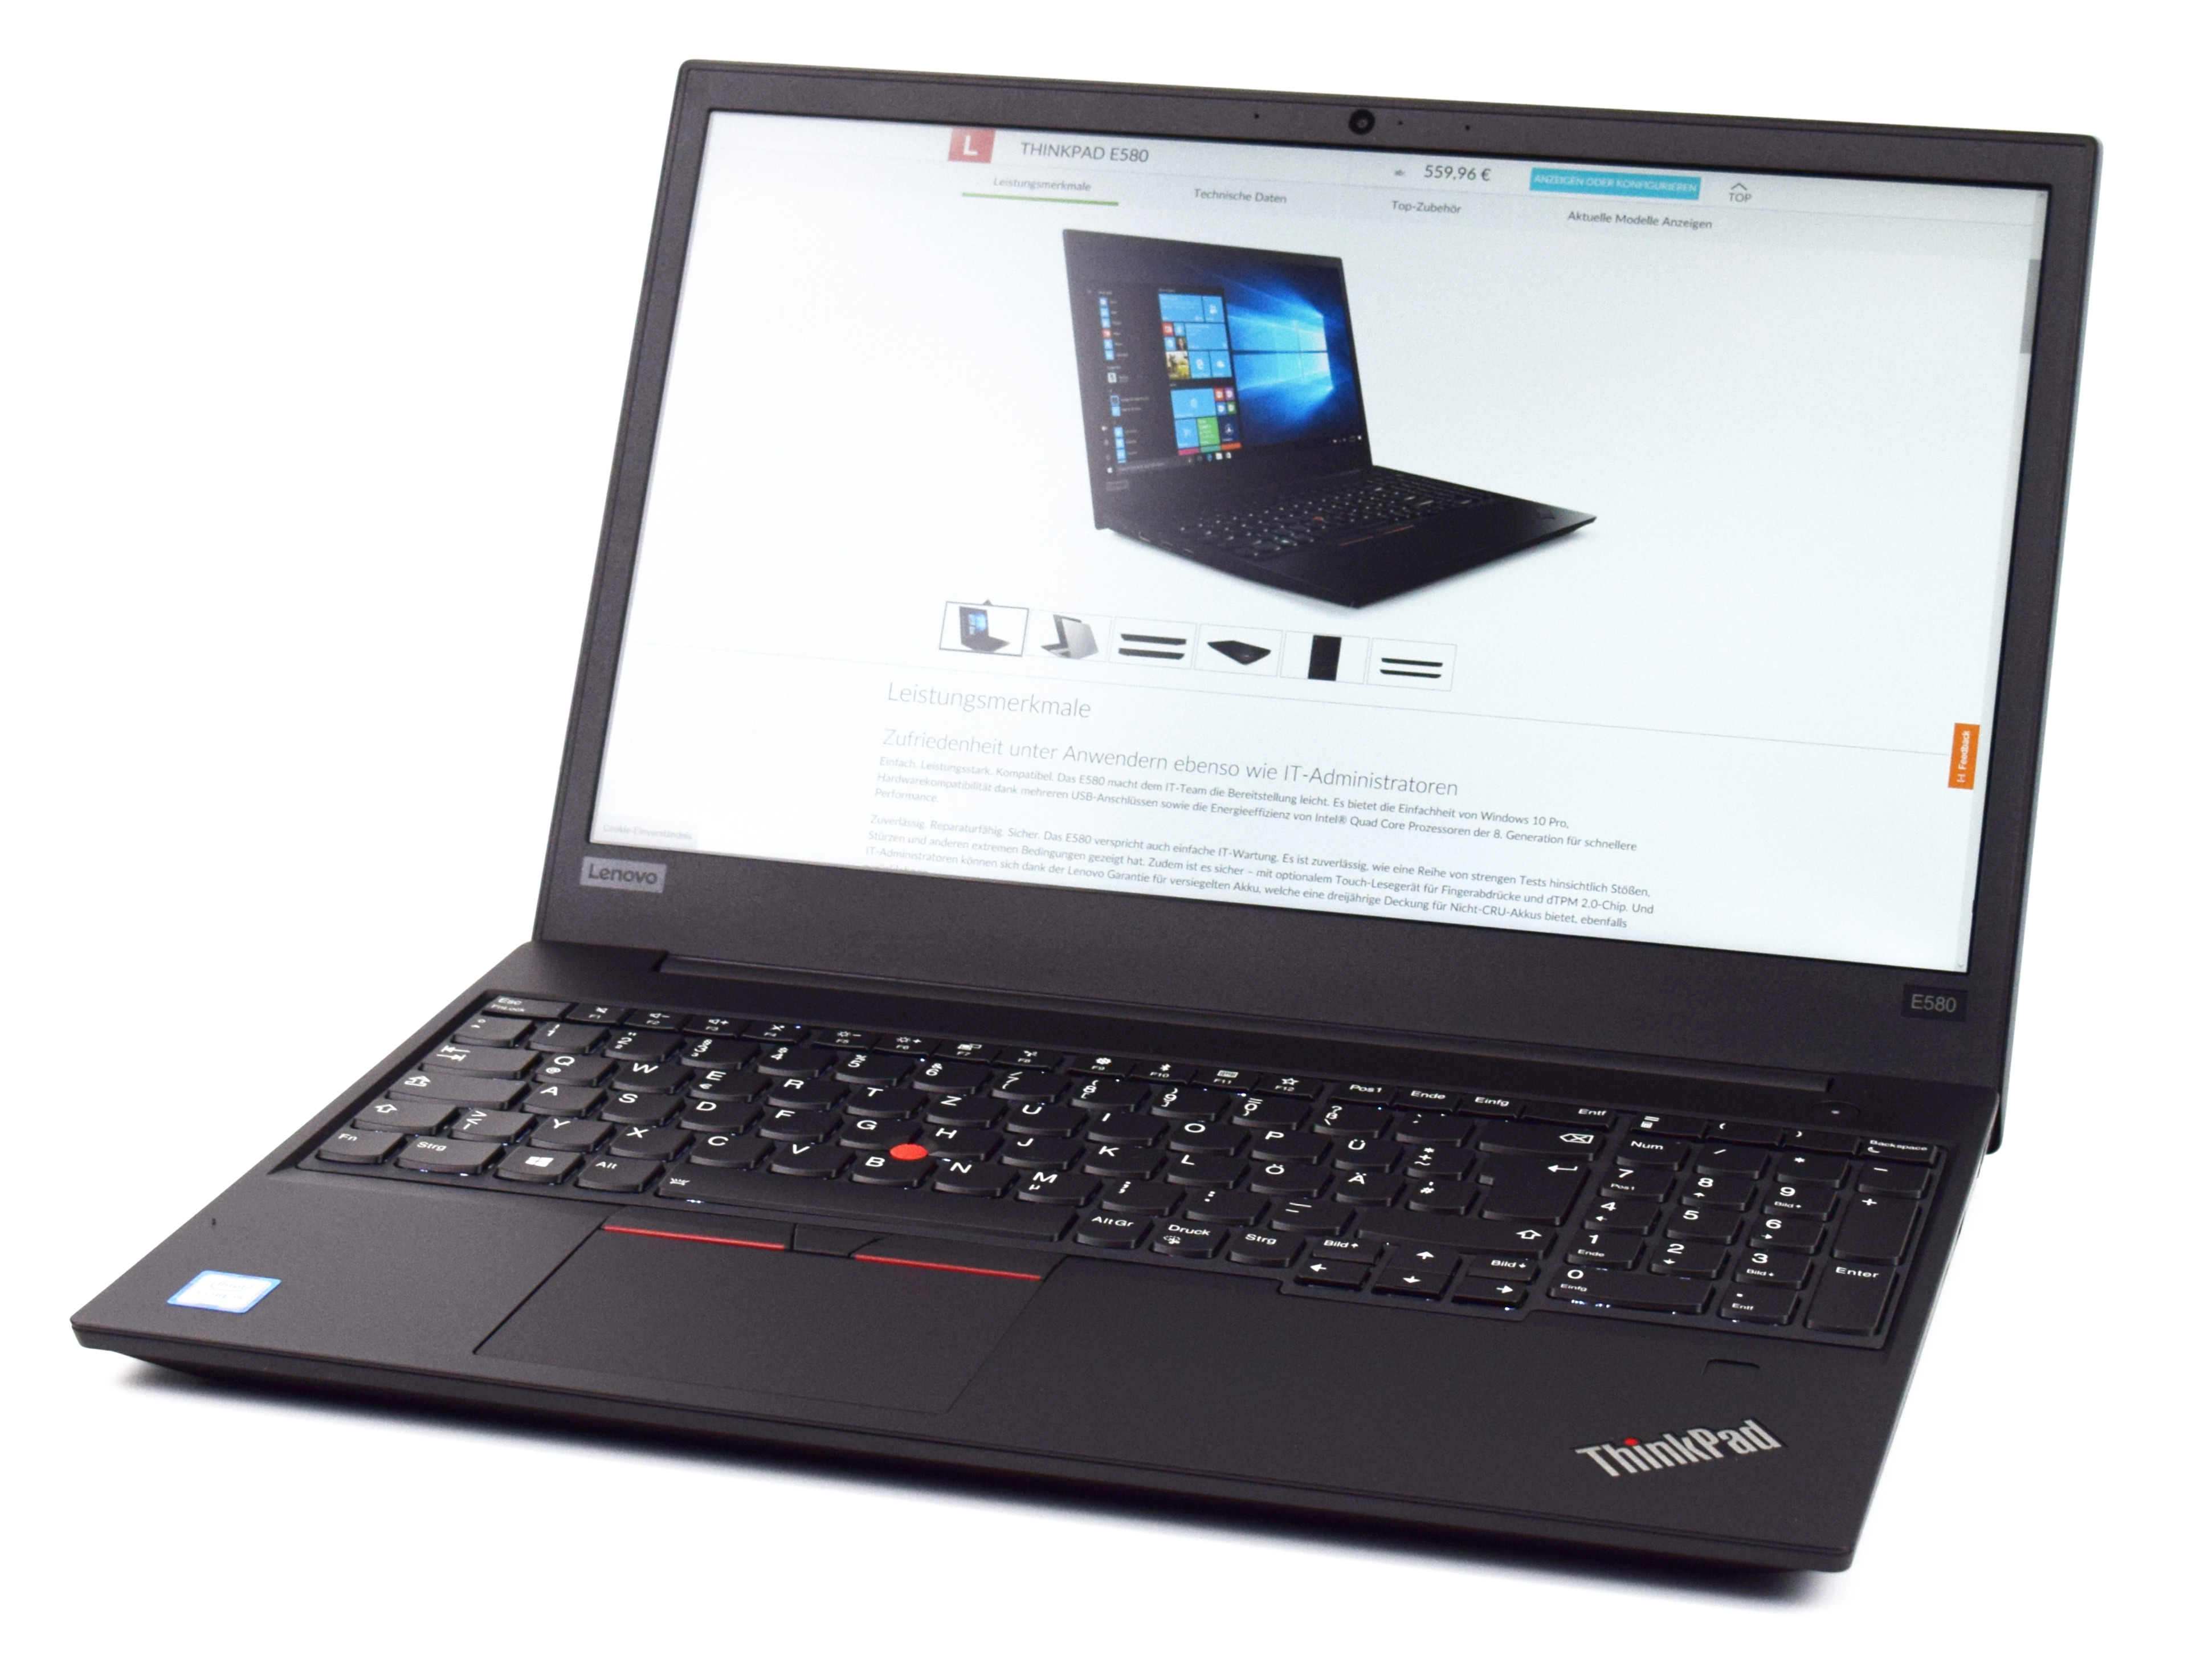  Lenovo ThinkPad E580 20KSCTO1WW Notebookcheck External Reviews